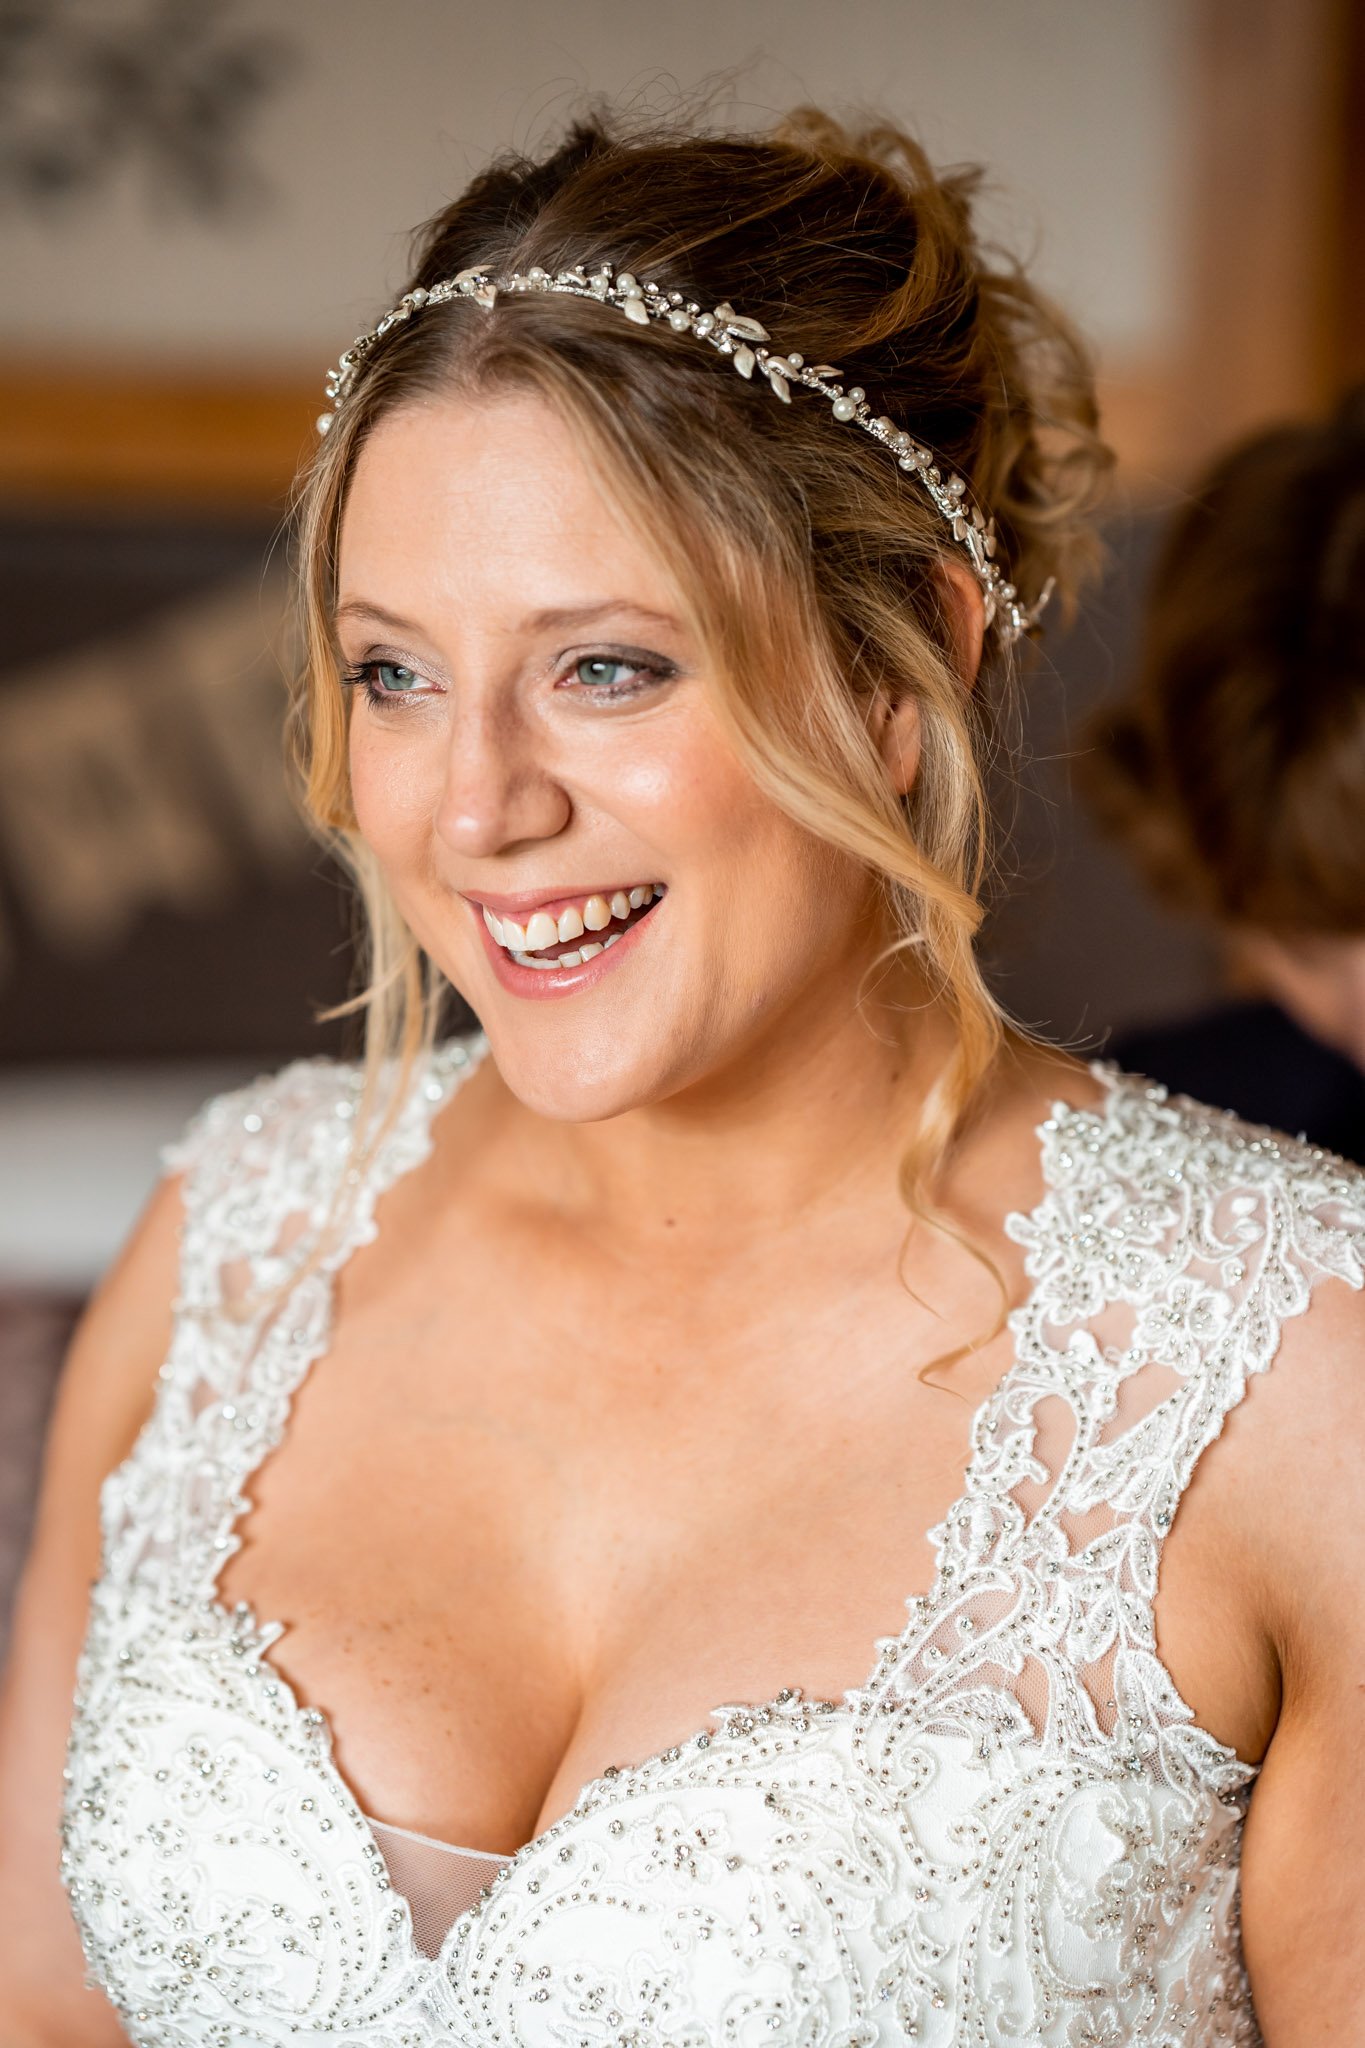 KateChris-049-elopement-photographer-devon-Rebecca-Roundhill-Photography.JPG